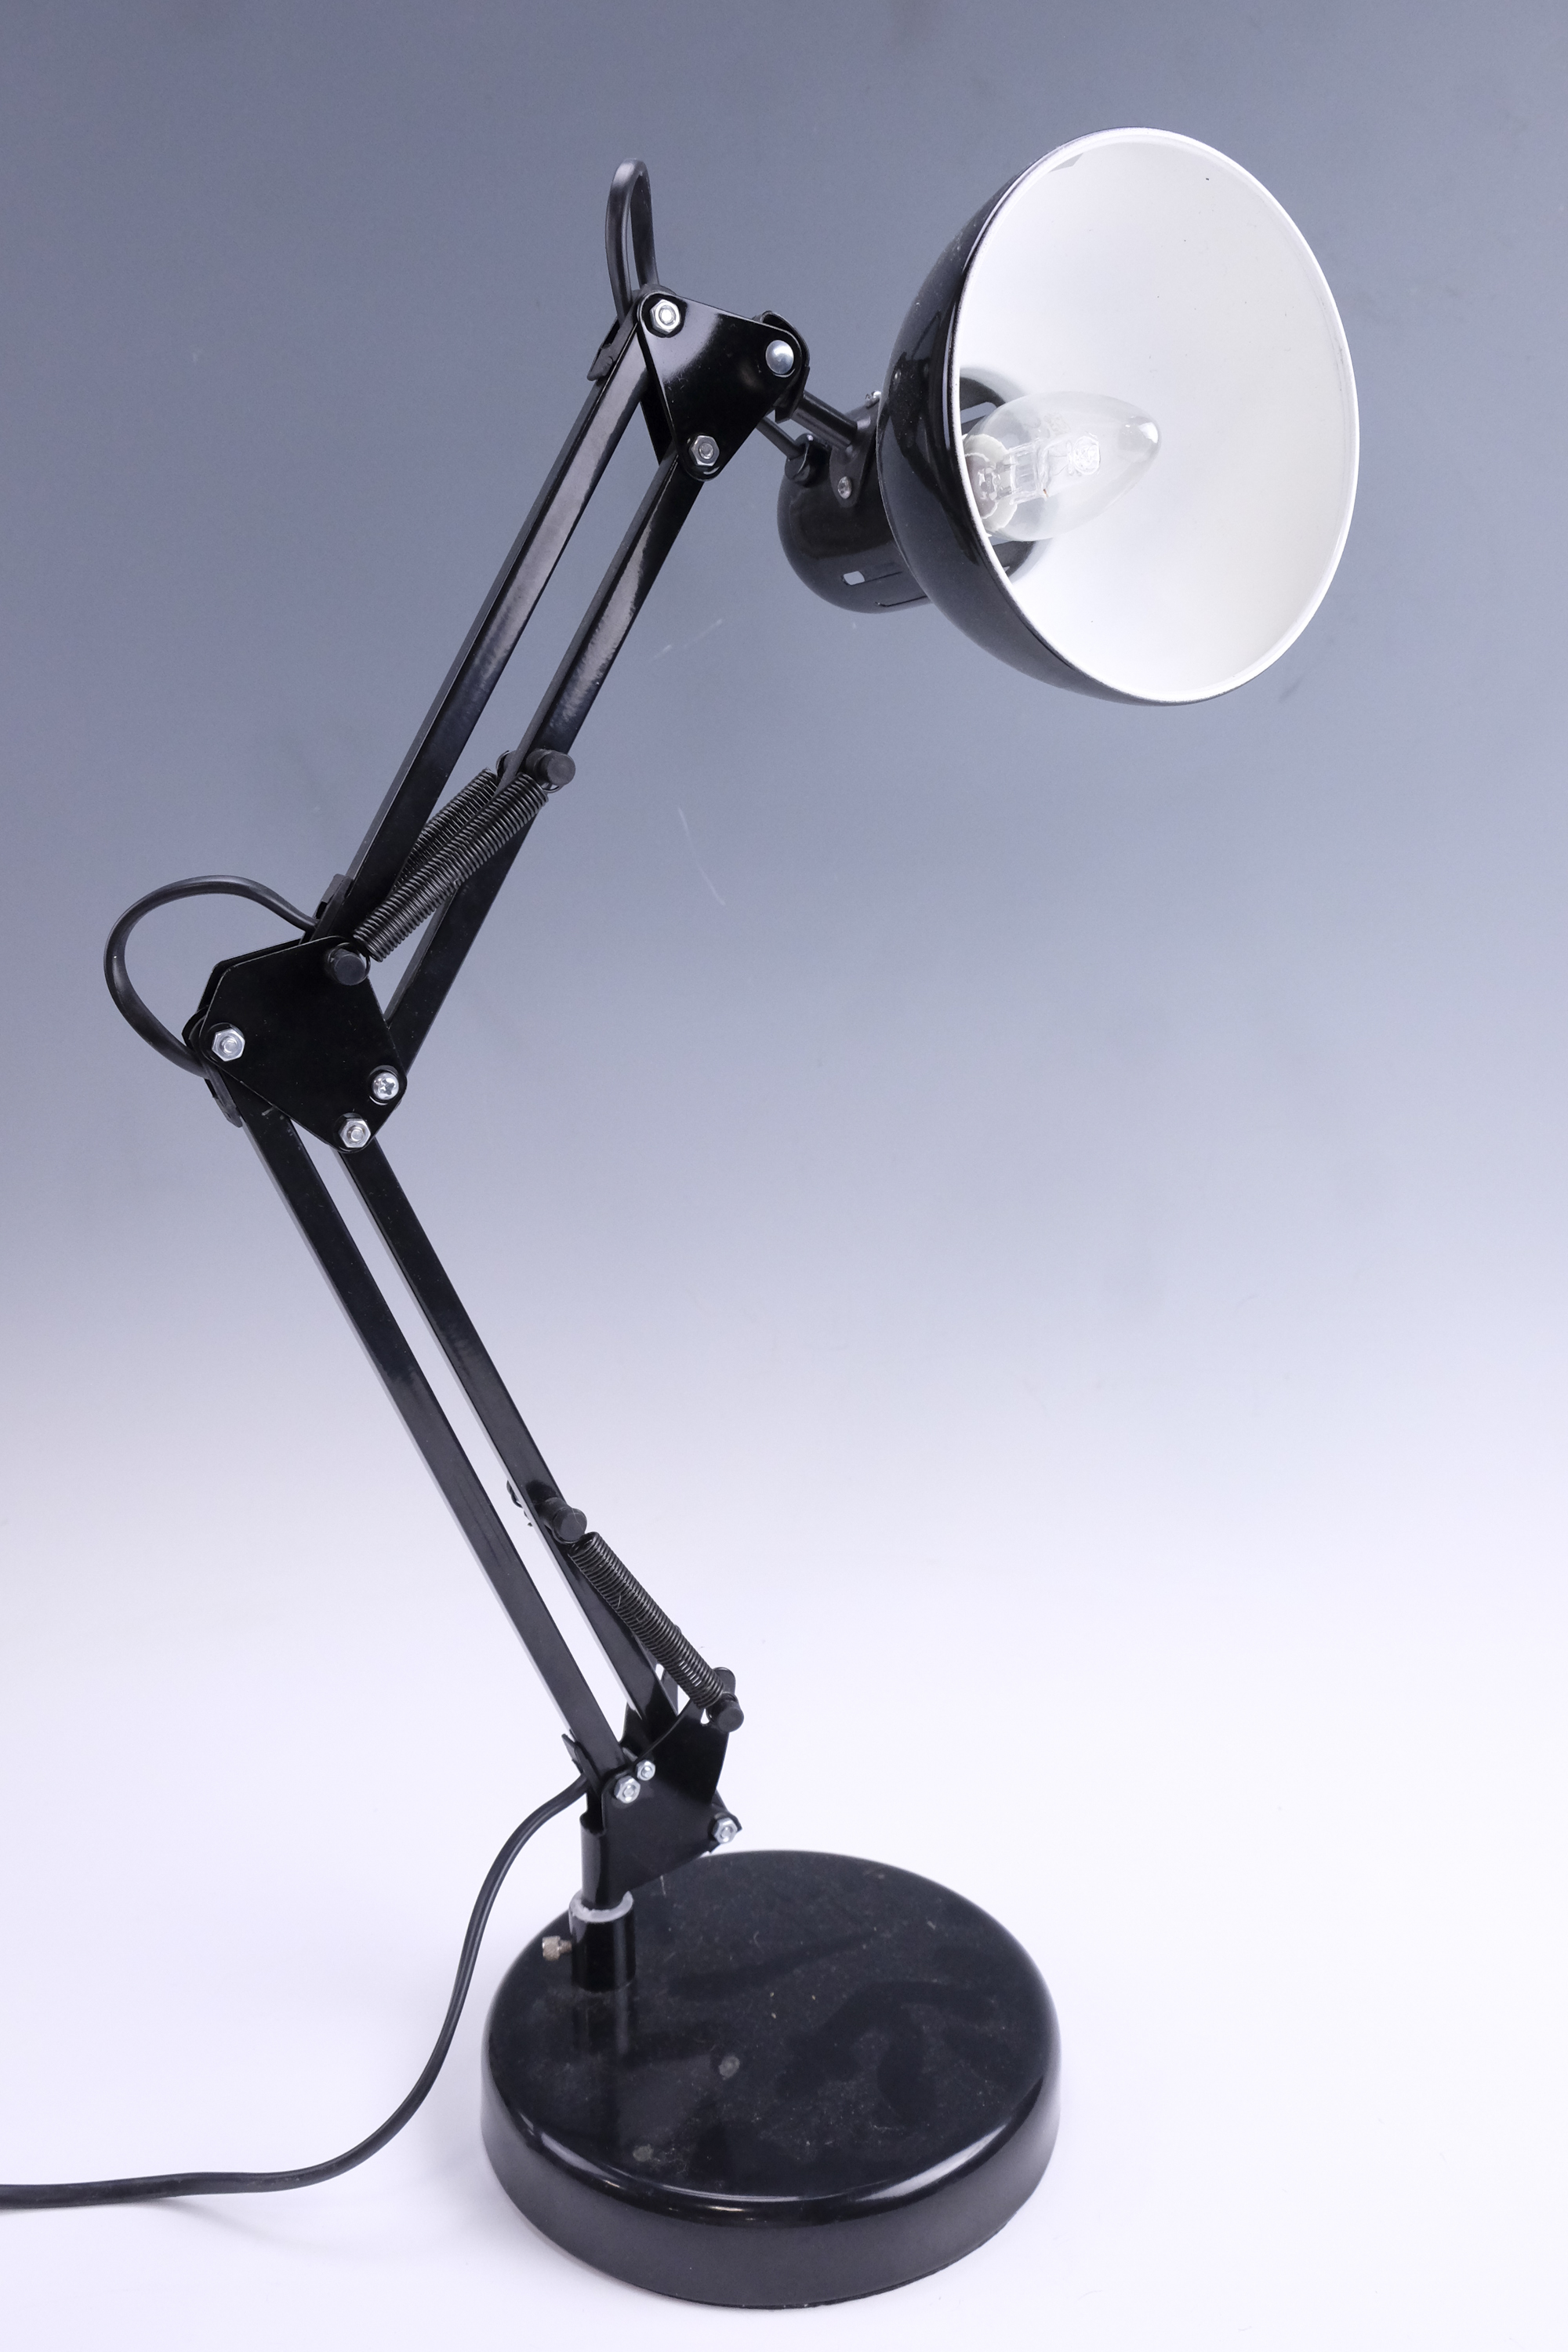 A contemporary adjustable black desk lamp